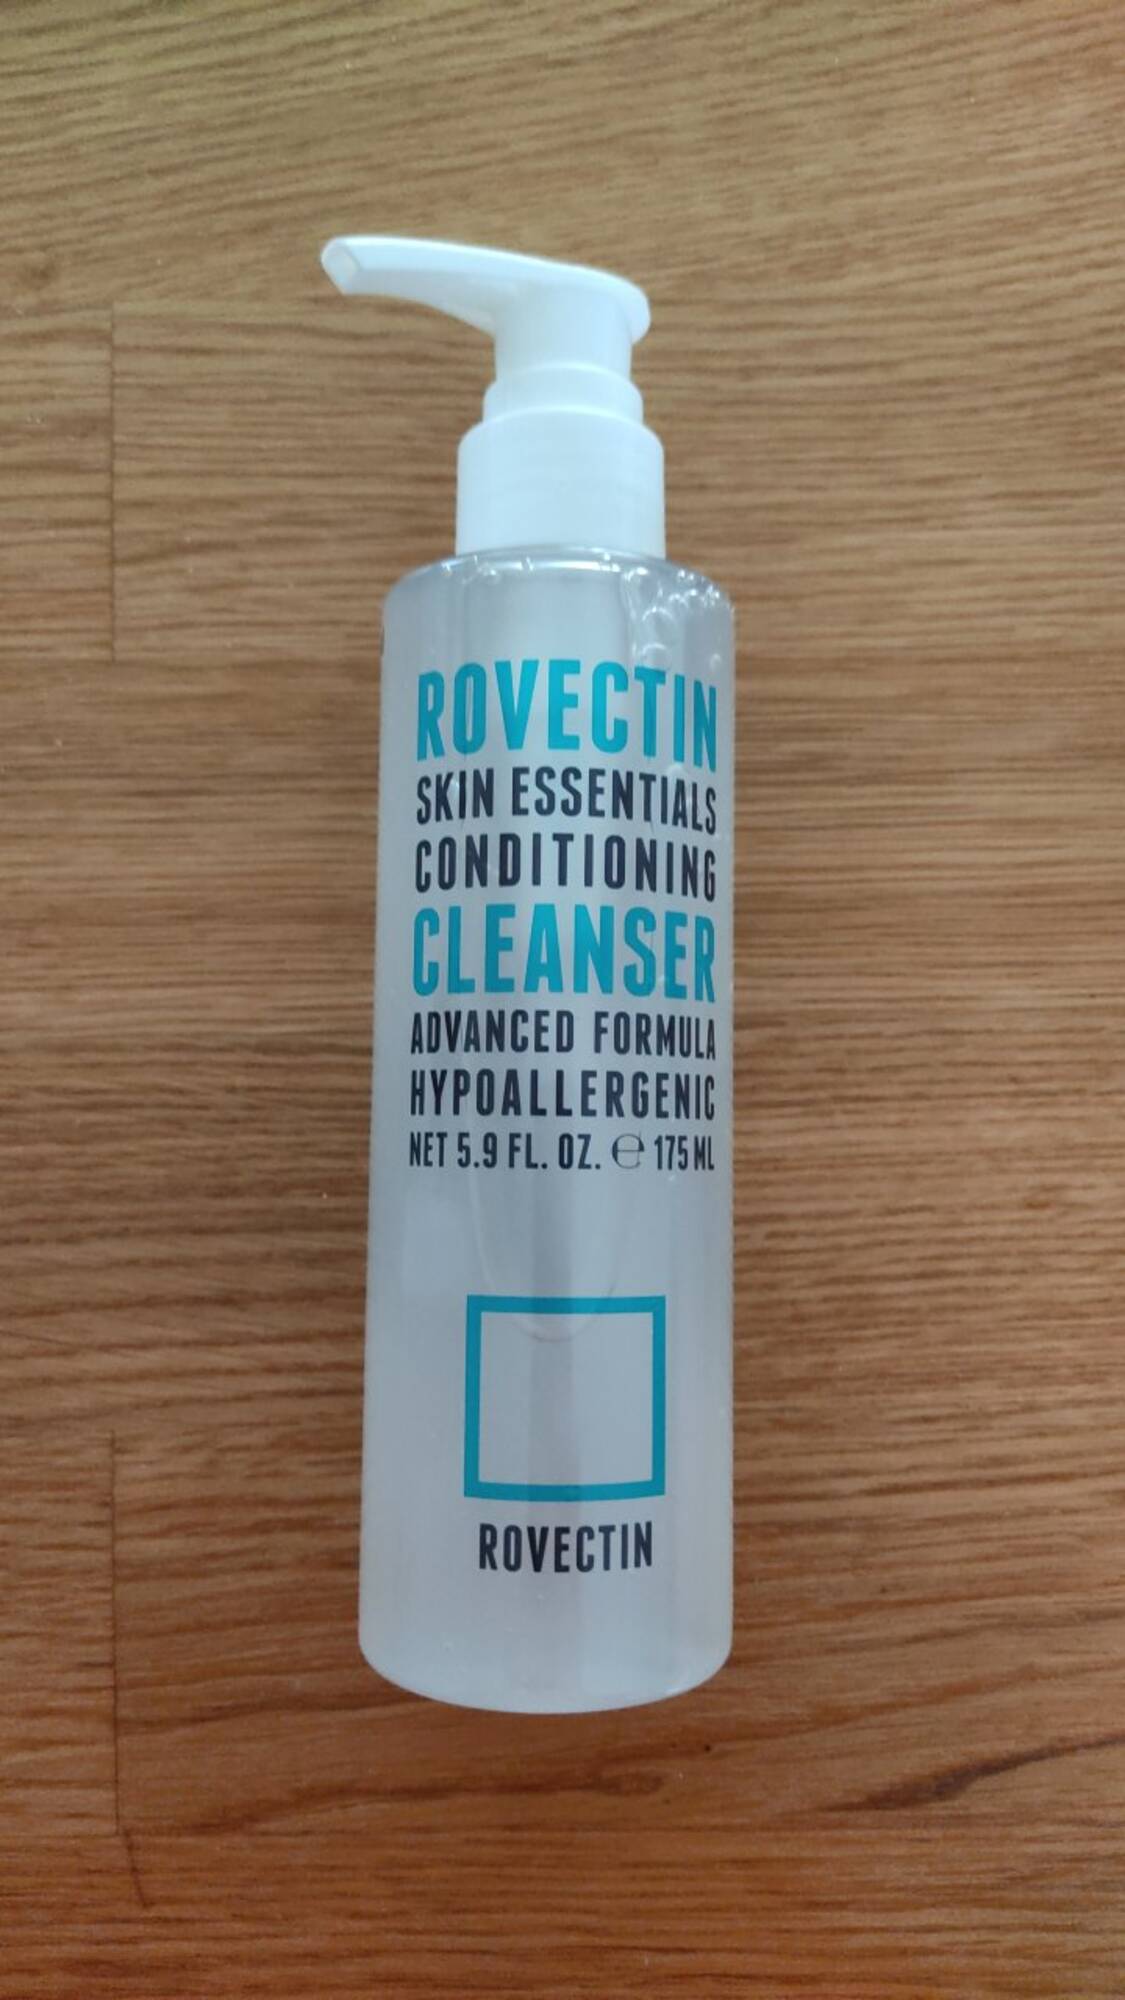 ROVECTIN - Skin essentials conditioning cleanser